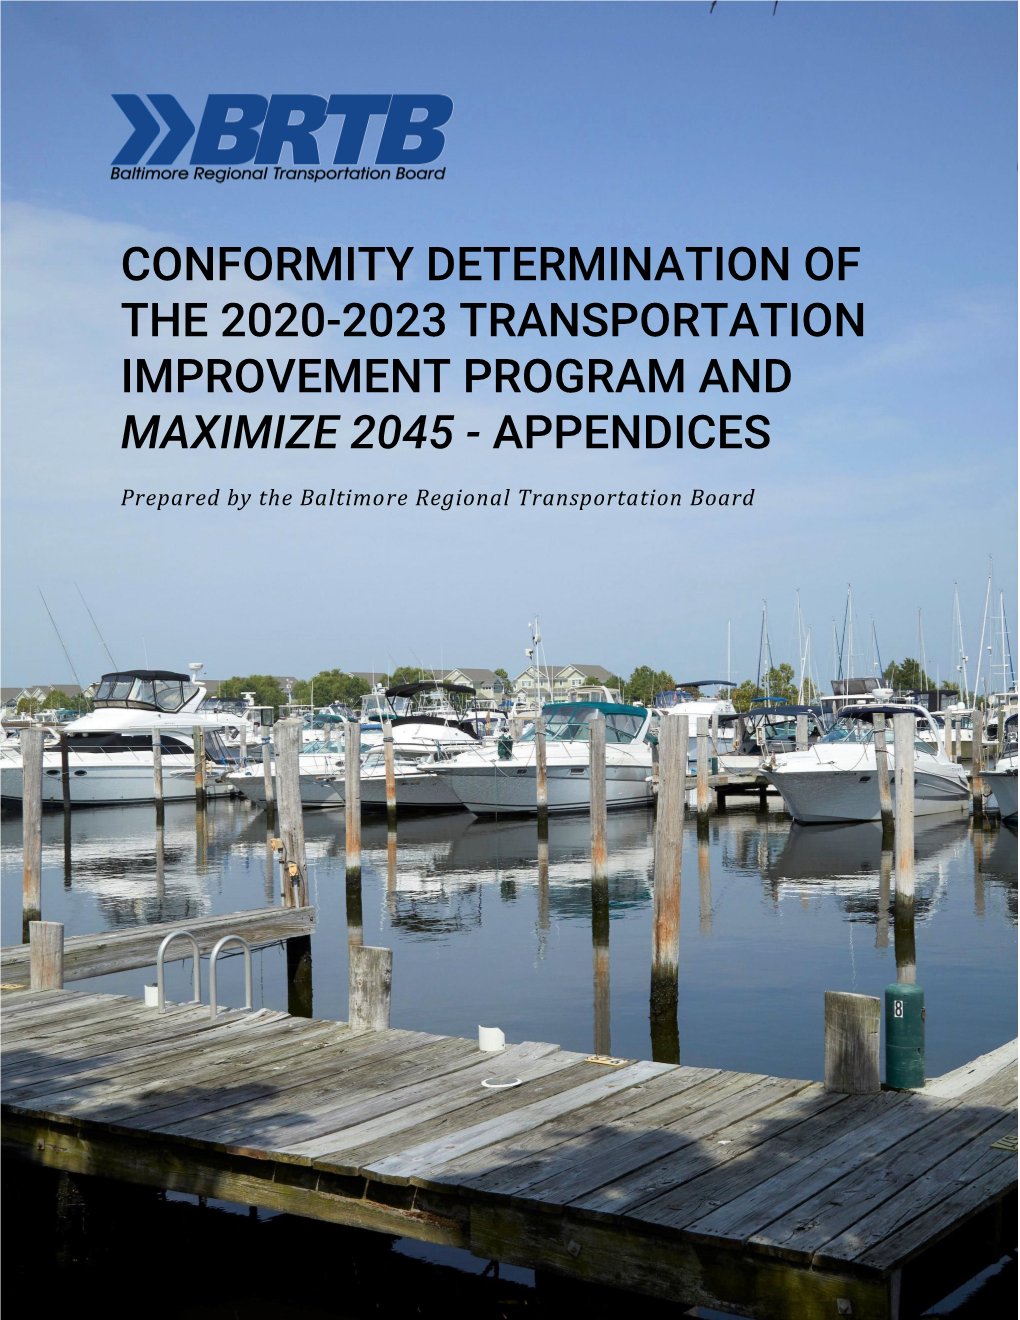 Conformity Determination of the 2020-2023 Transportation Improvement Program and Maximize 2045 - Appendices